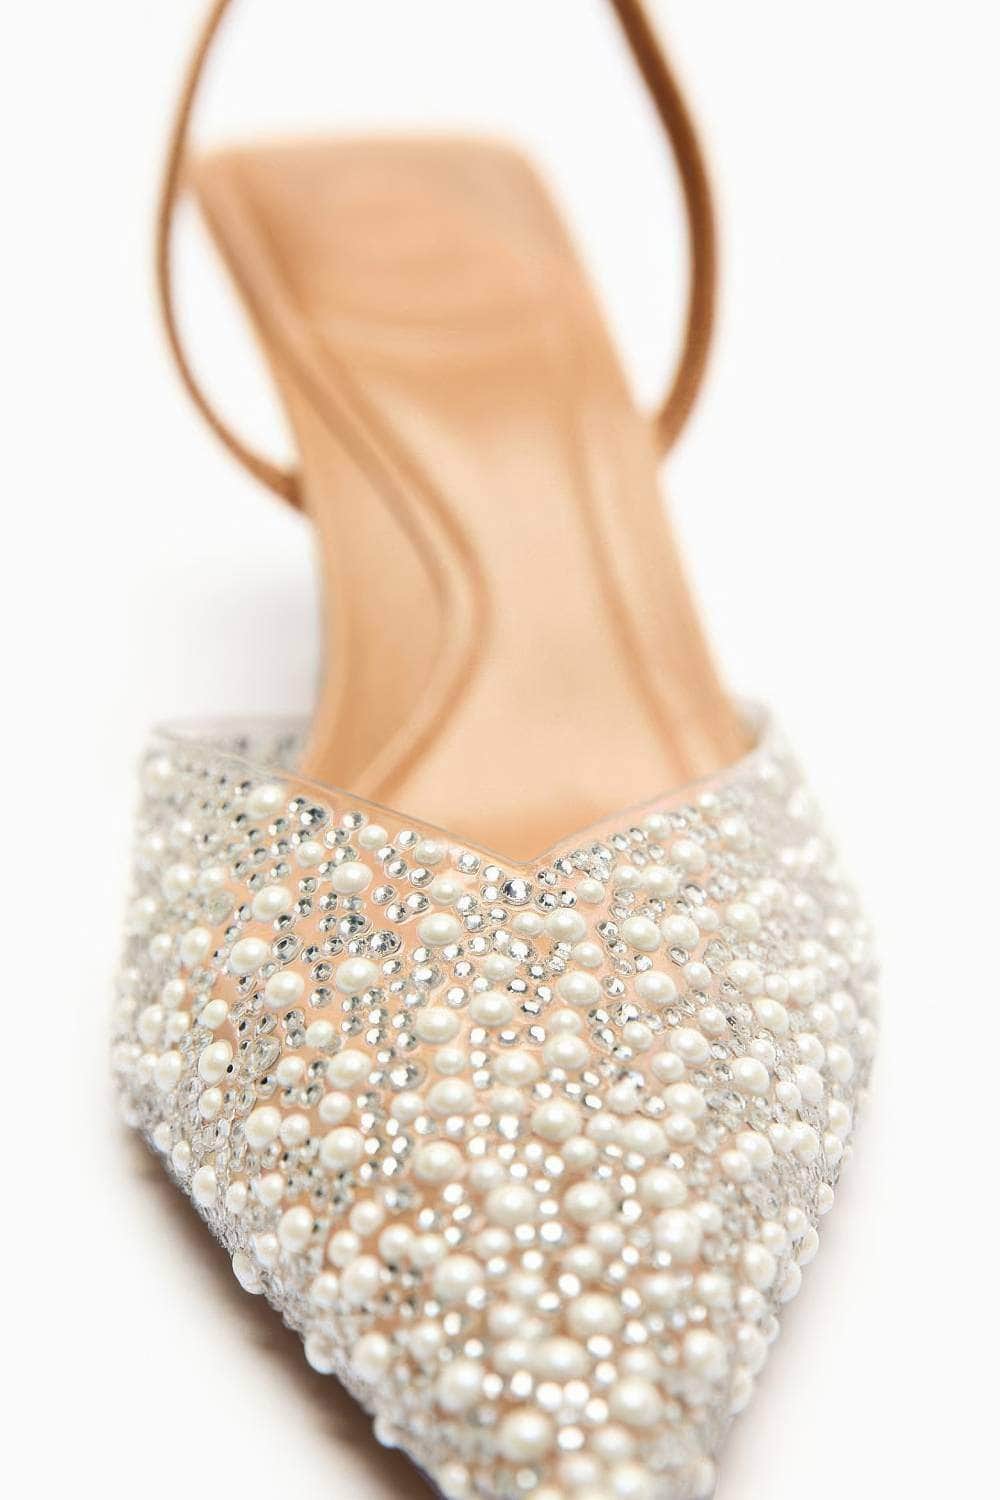 Crystal Pearl Embellished Slingback Sandal Heels